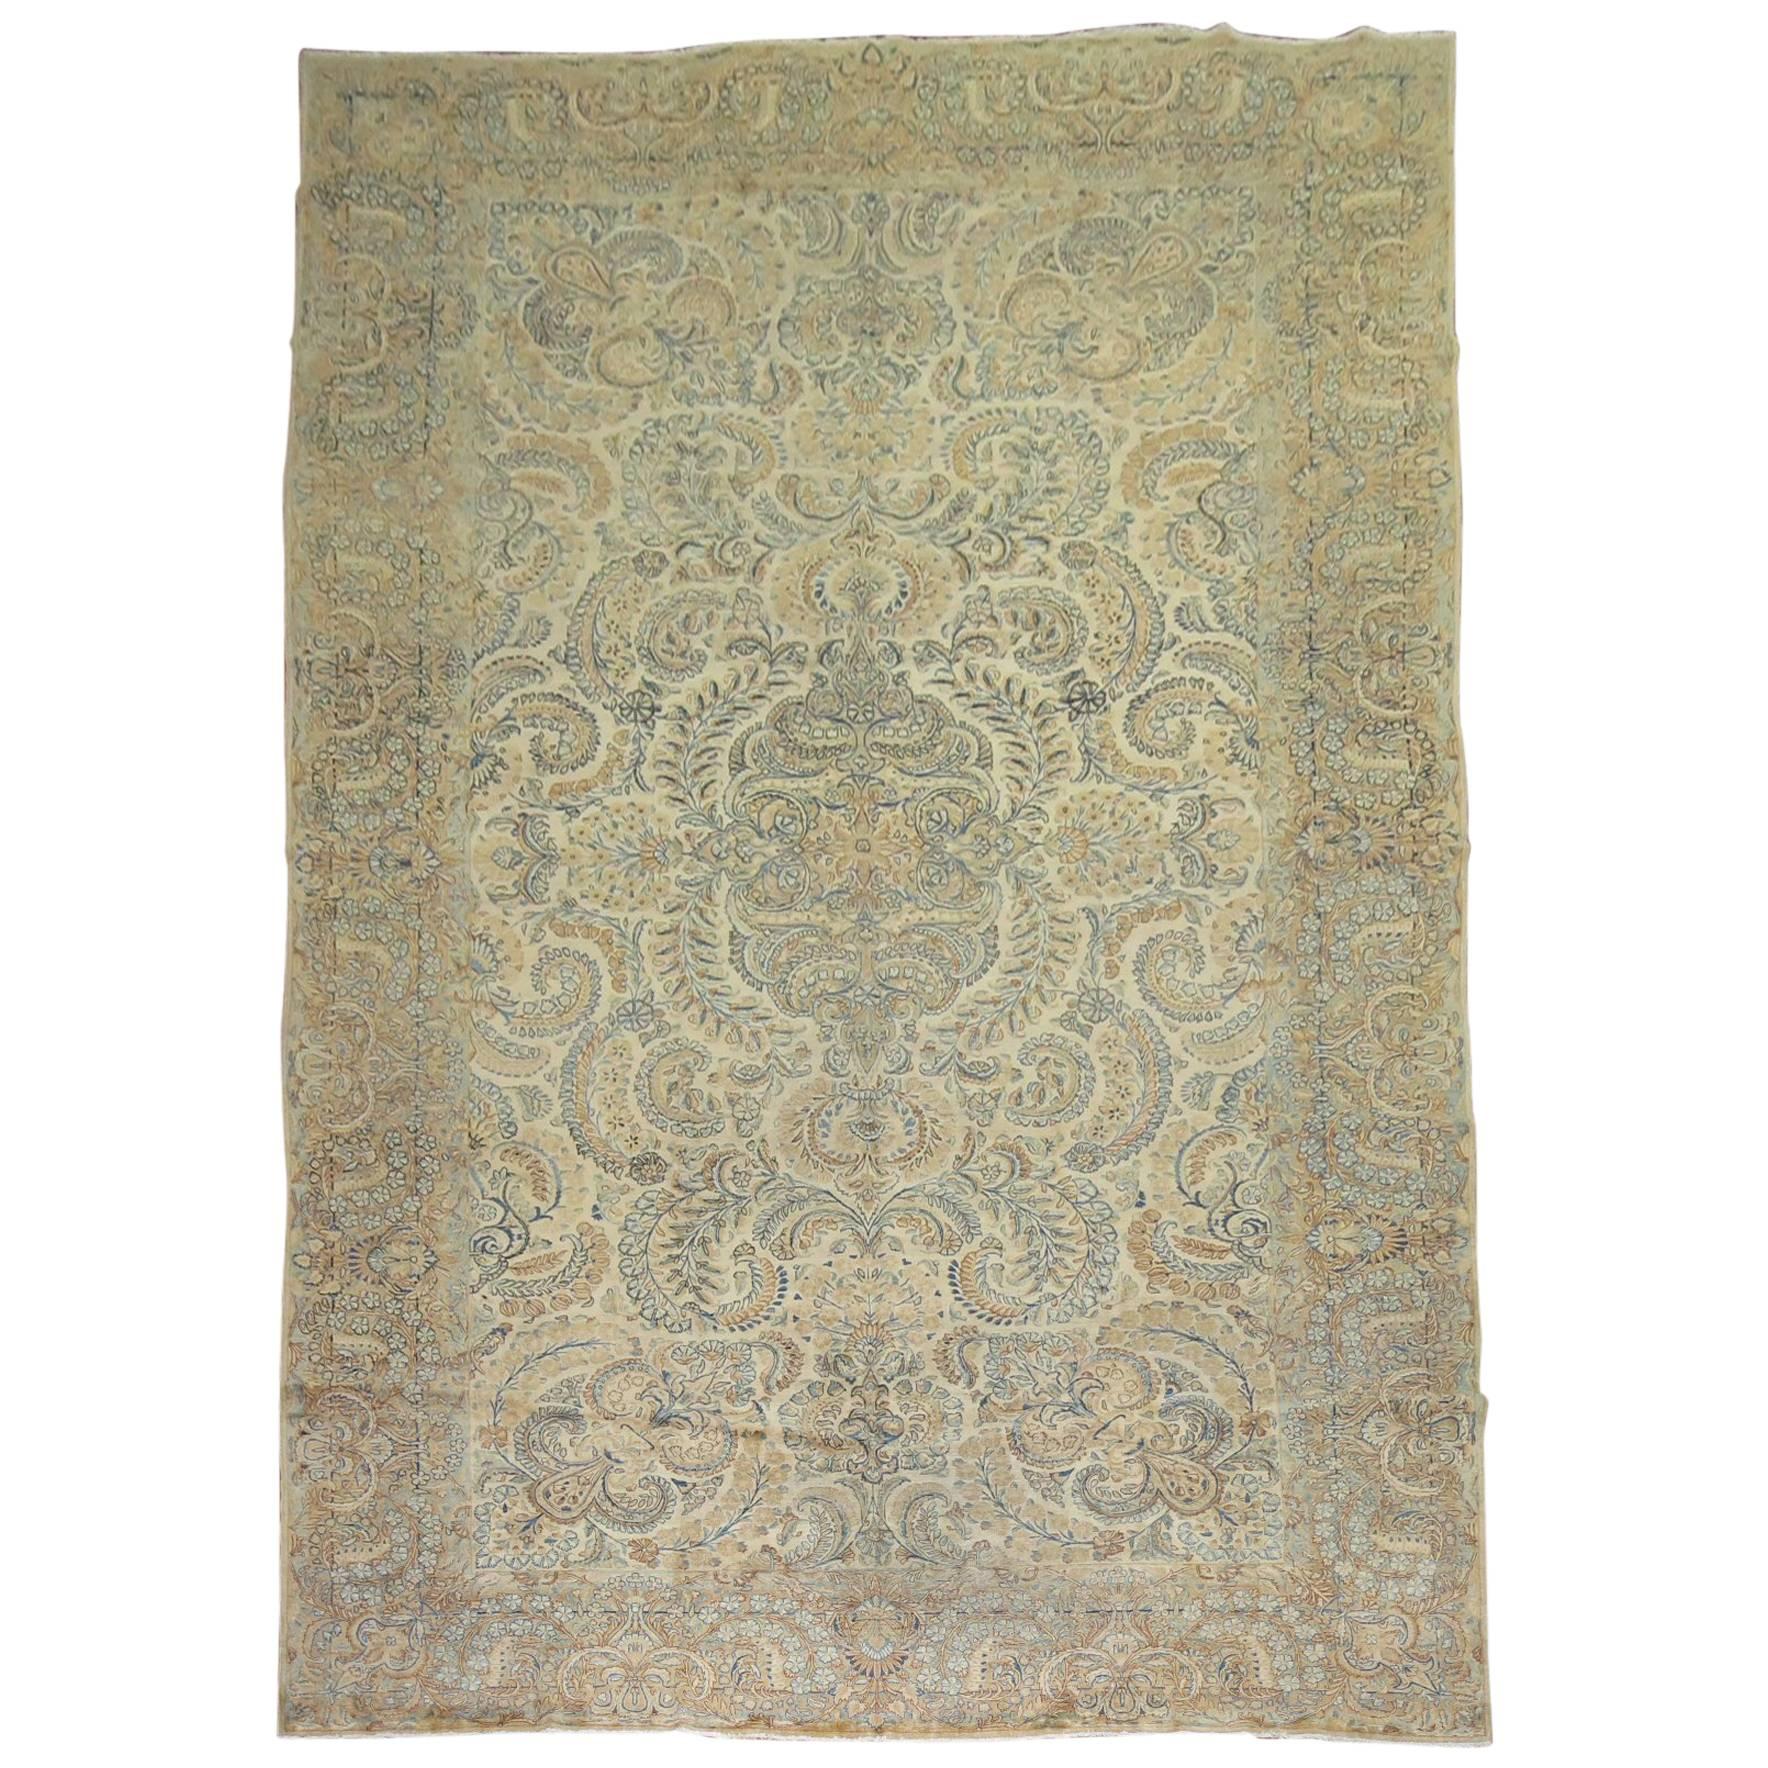 Zabihi Kollektion Oversize Antiker persischer Kerman-Teppich des frühen 20. Jahrhunderts